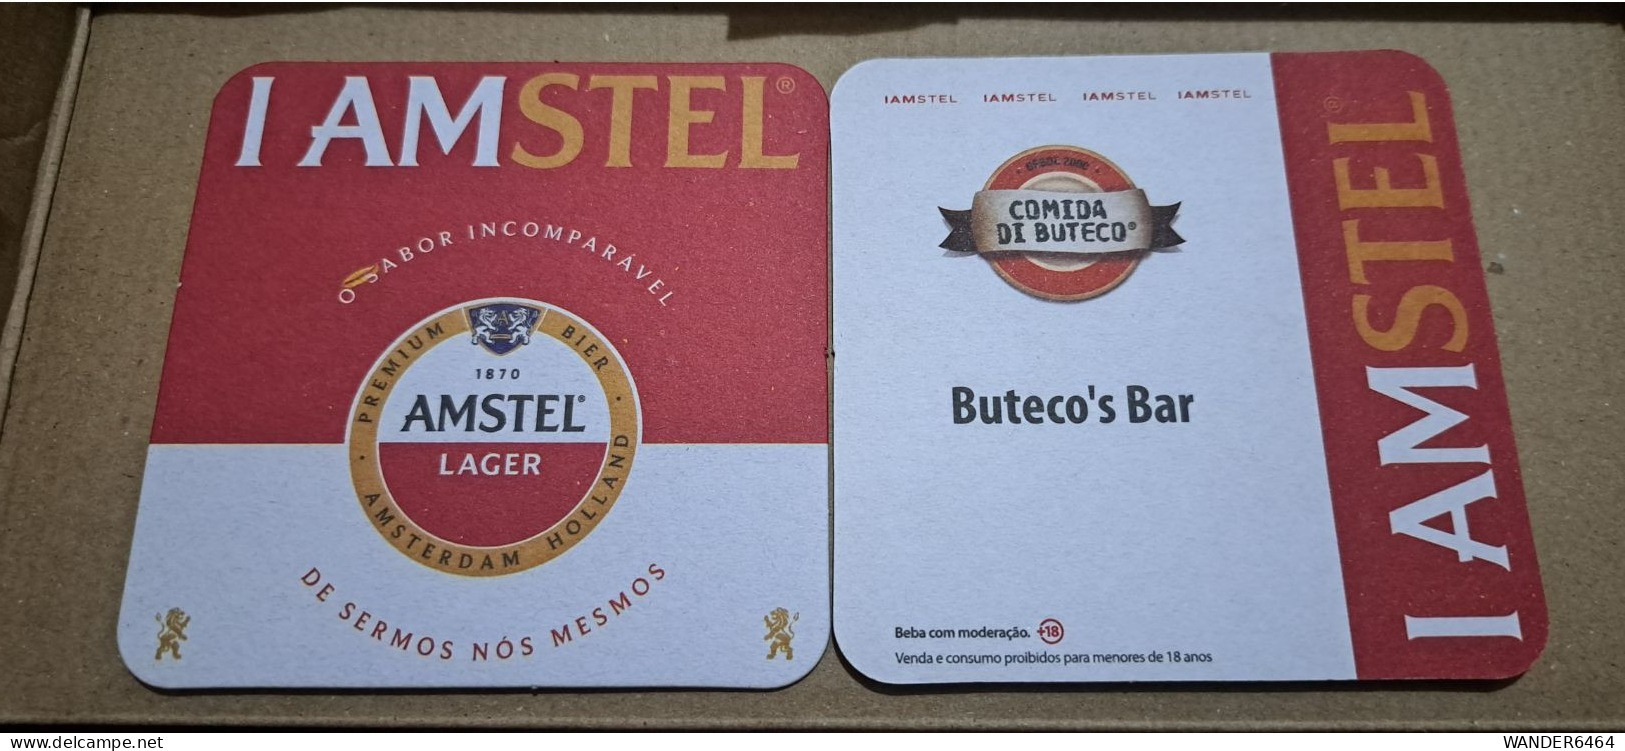 AMSTEL HISTORIC SET BRAZIL BREWERY  BEER  MATS - COASTERS #048  BUTECO'S BAR - Beer Mats